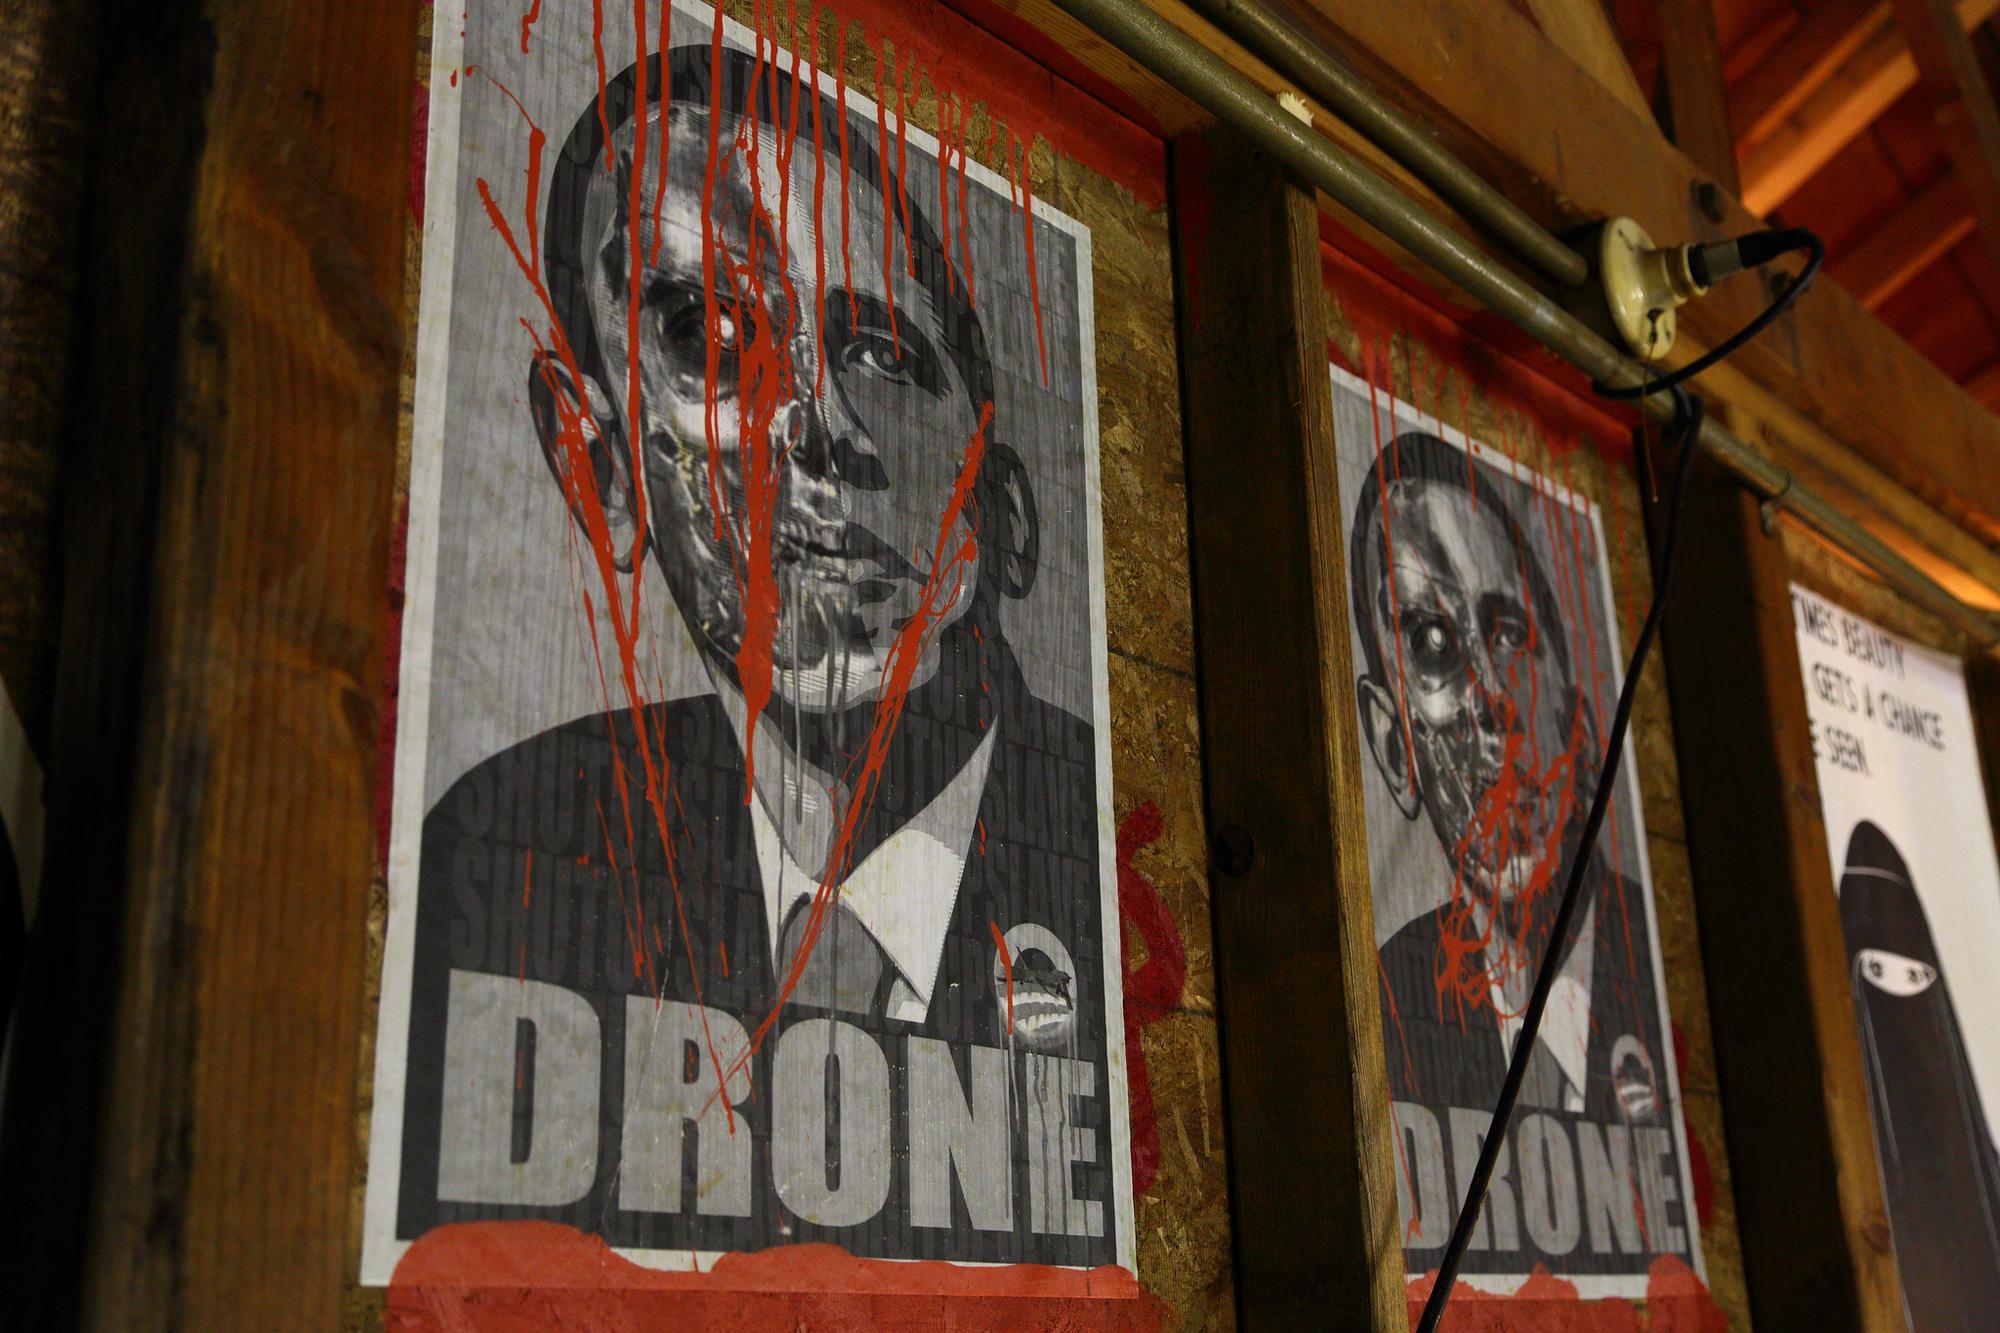 Obama drones